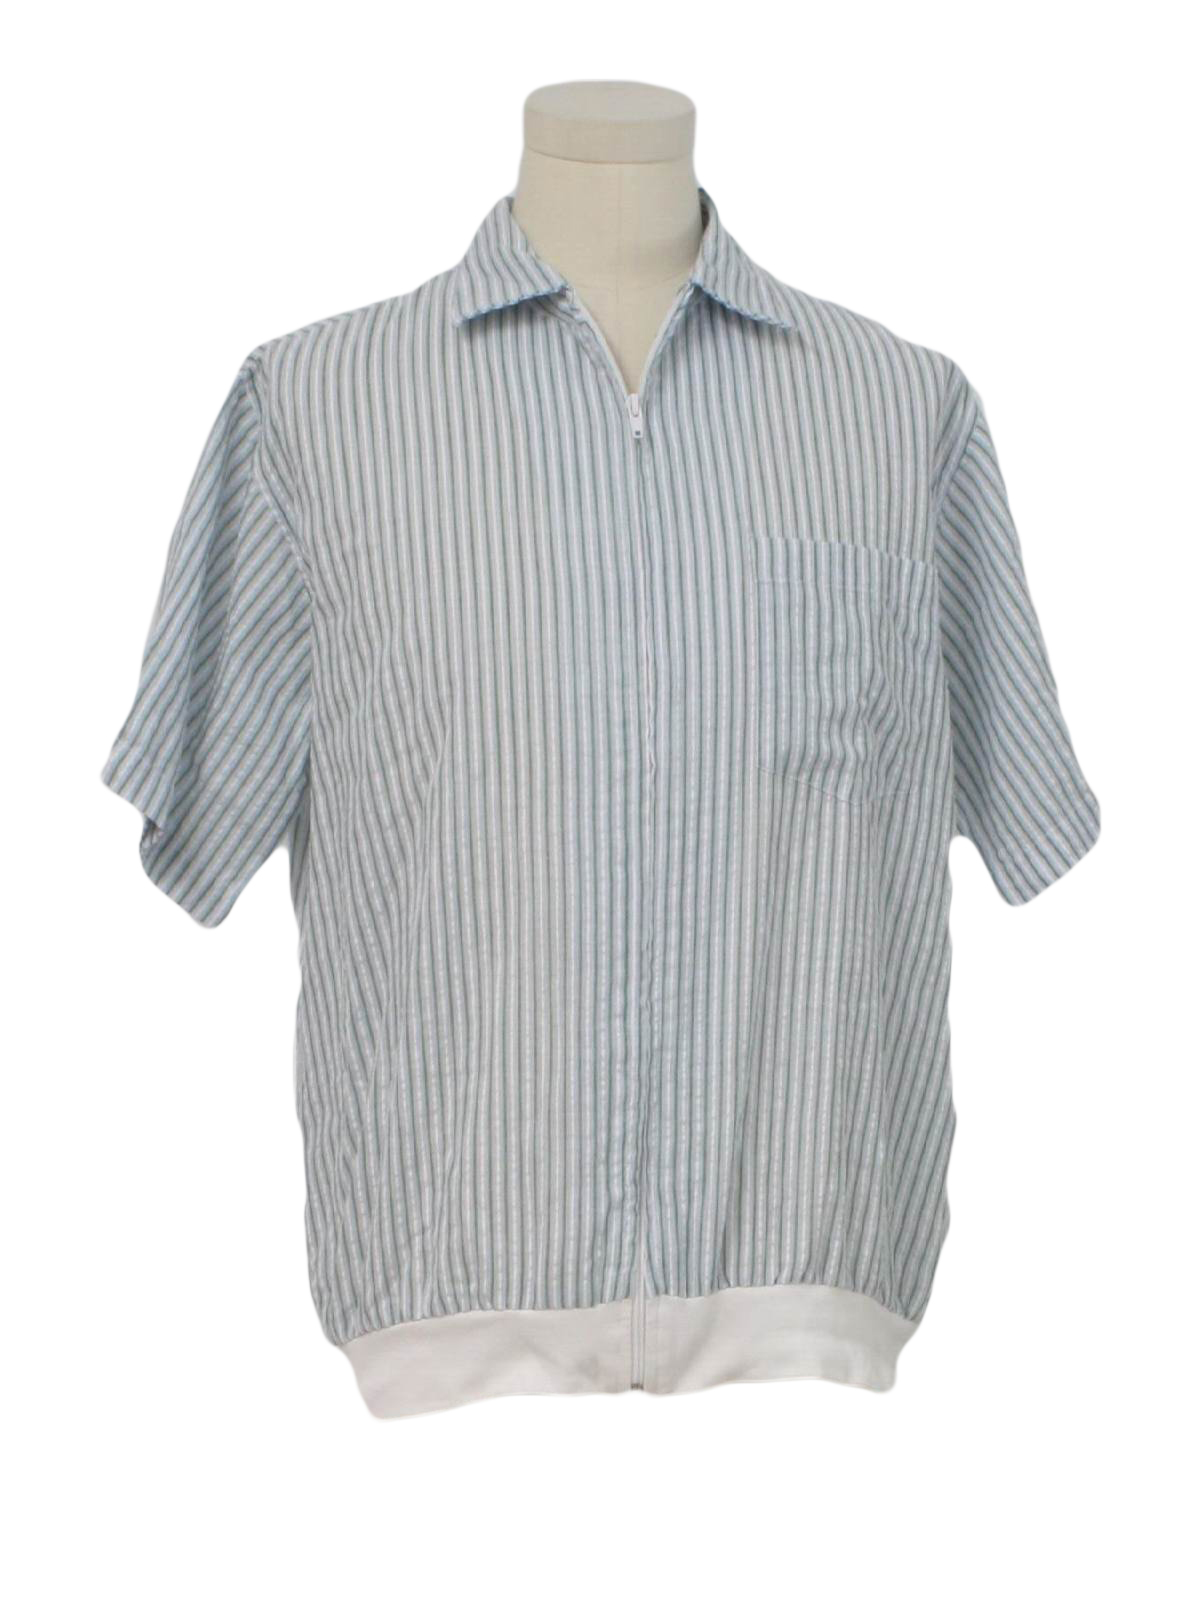 Retro 1980's Shirt (Haband) : 80s -Haband- Mens cotton short sleeve ...